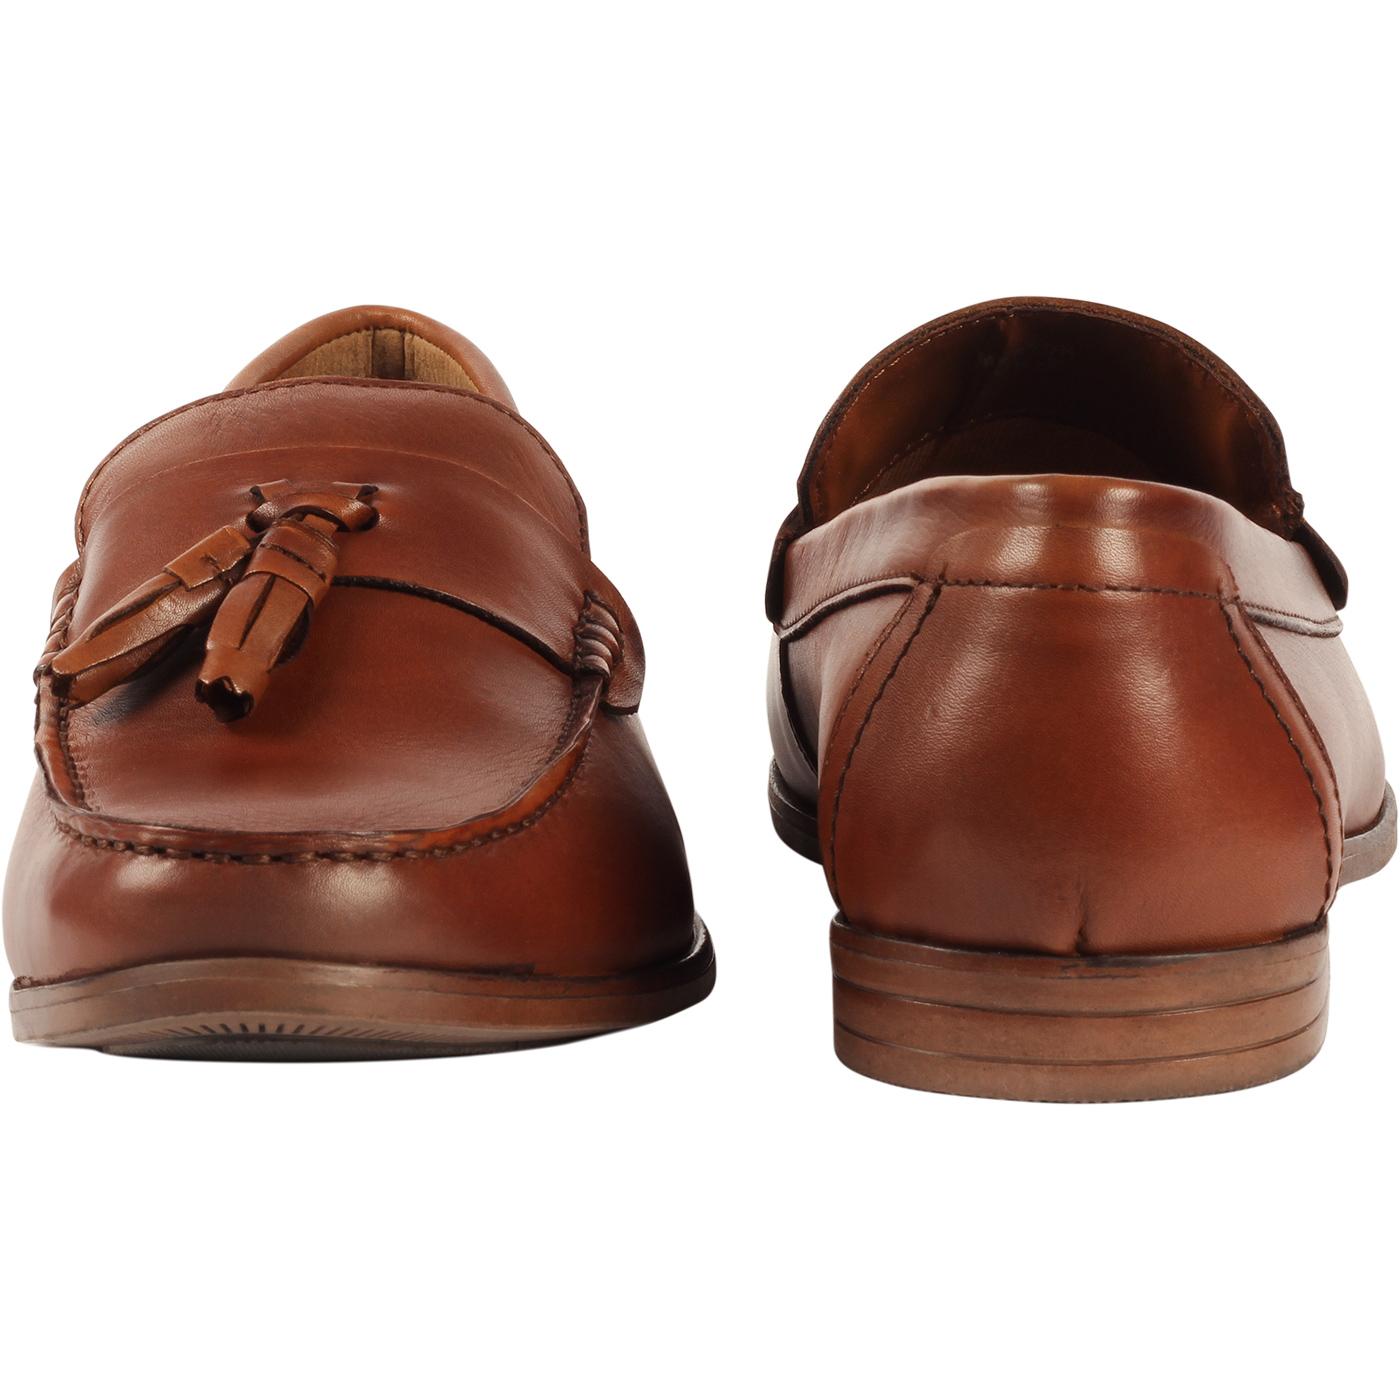 Retro 60s Mod Tassel Loafer Shoes 